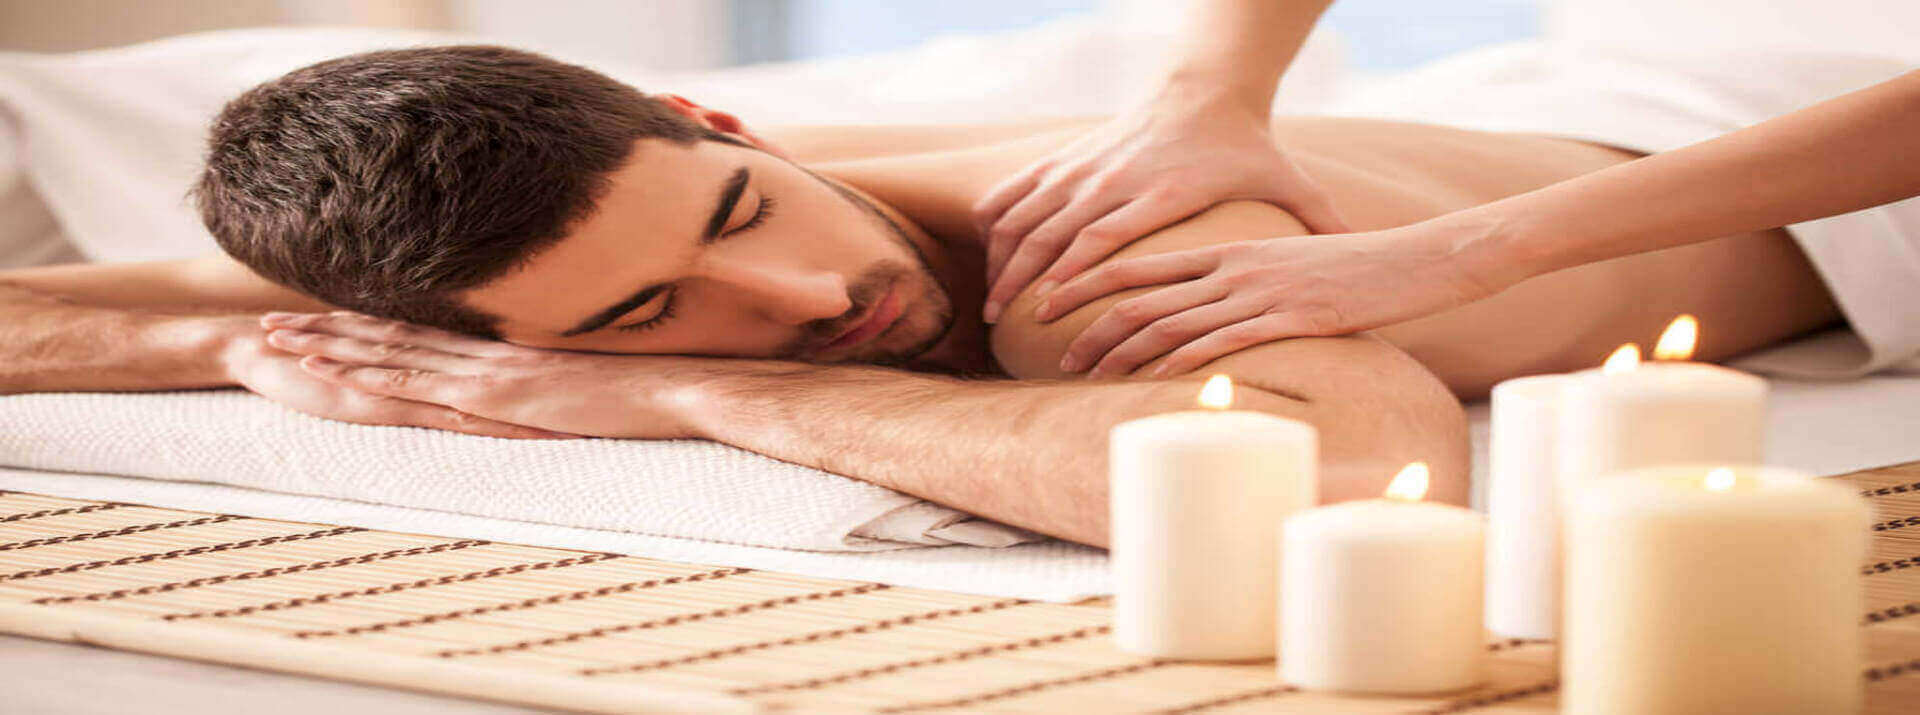 body massage in Salt Lake